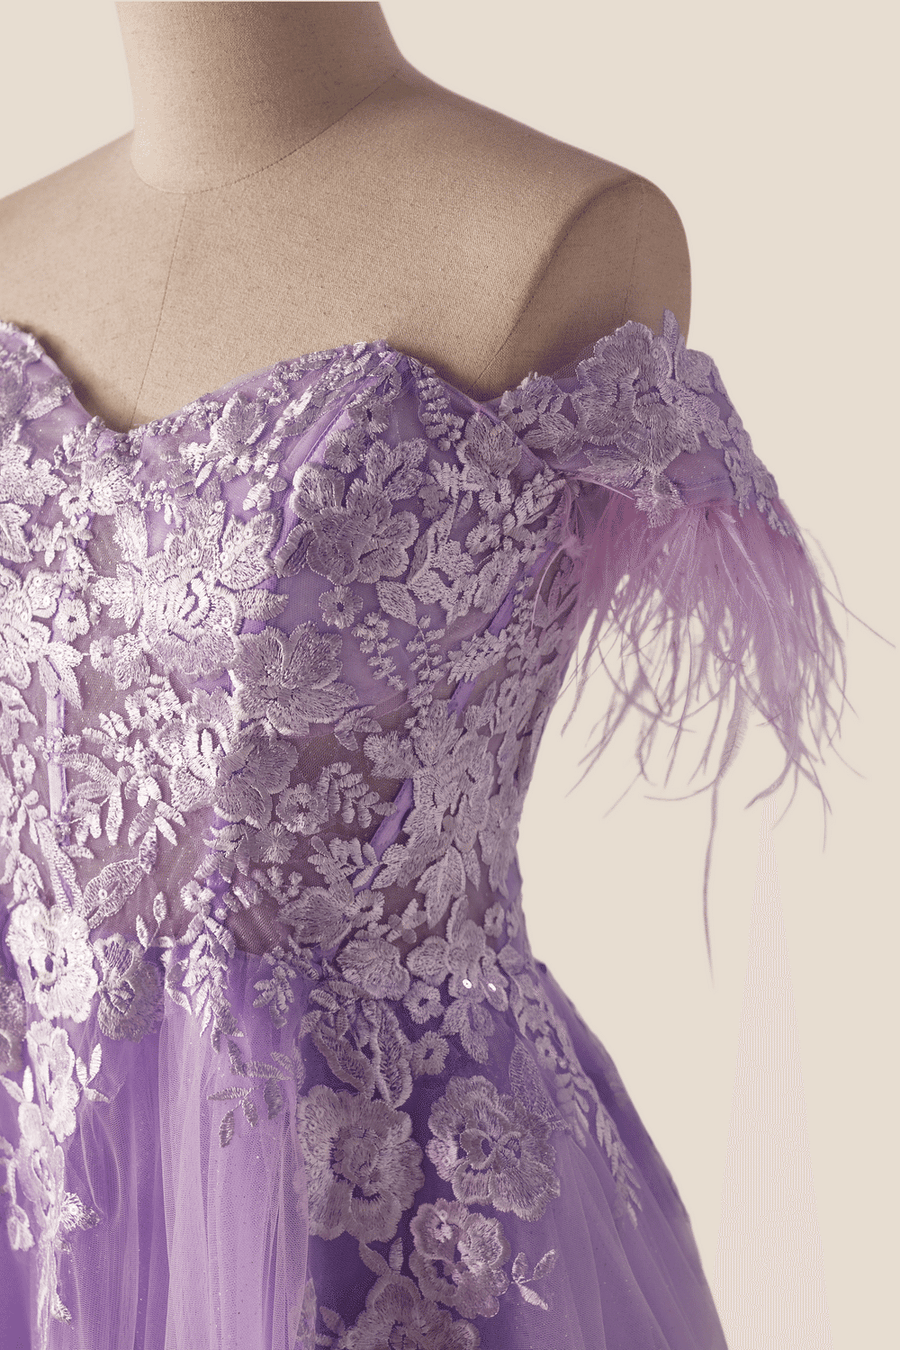 Off the Shoulder Lavender Lace Appliques Long Formal Dress